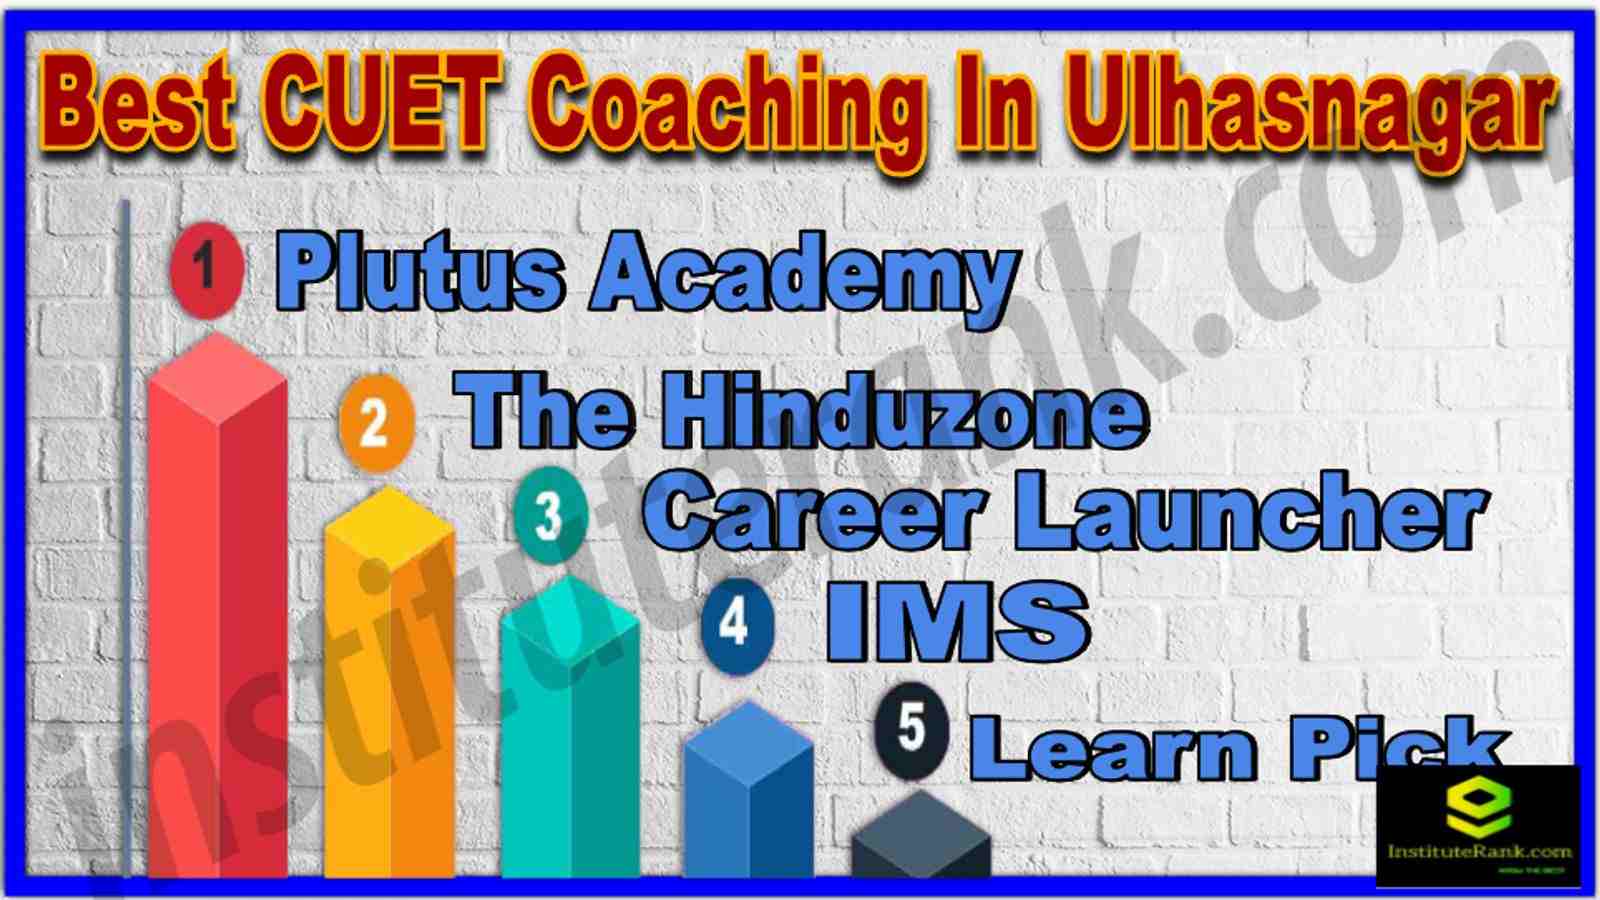 Best CUET Coaching In Ulhasnagar